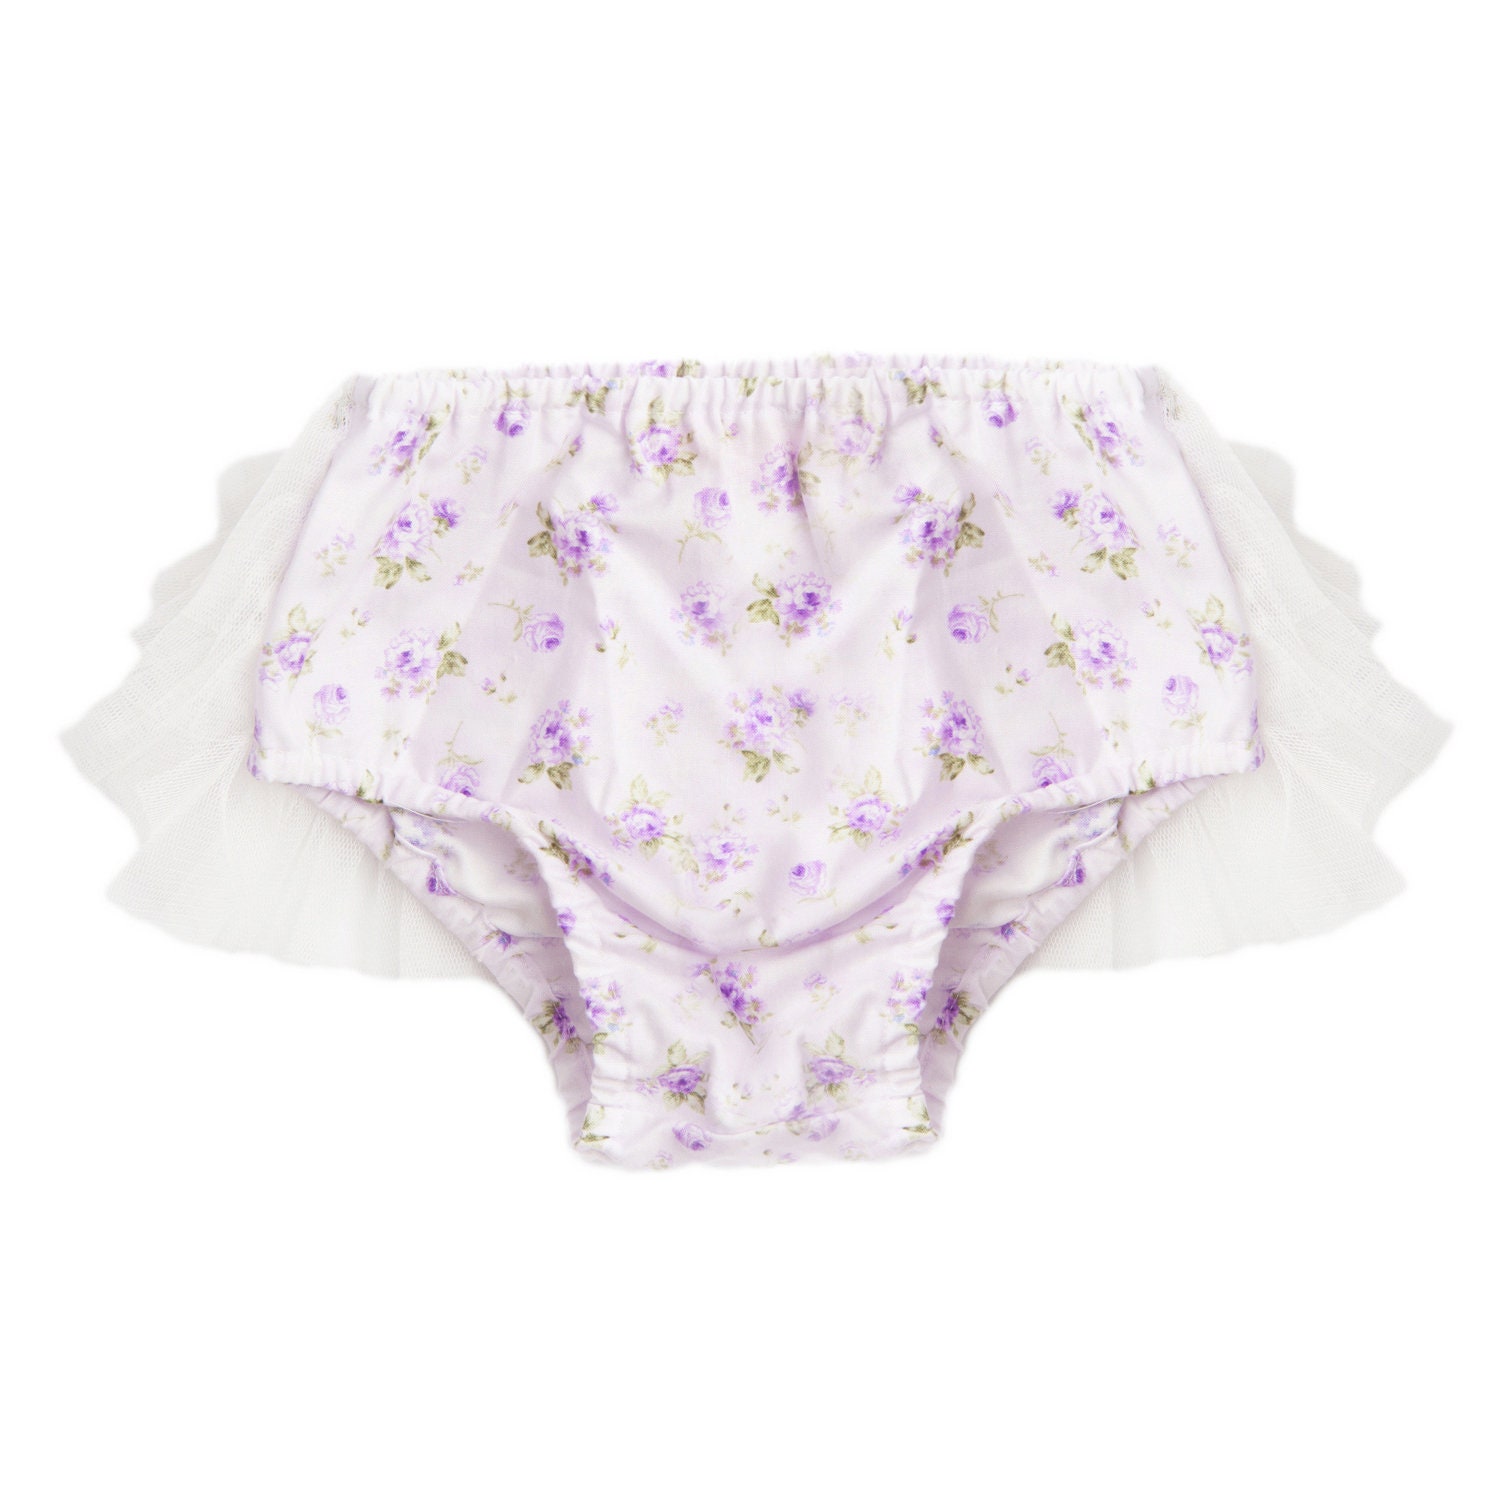 Baby girls dress Vintage purple violet floral fabric smocked | Etsy